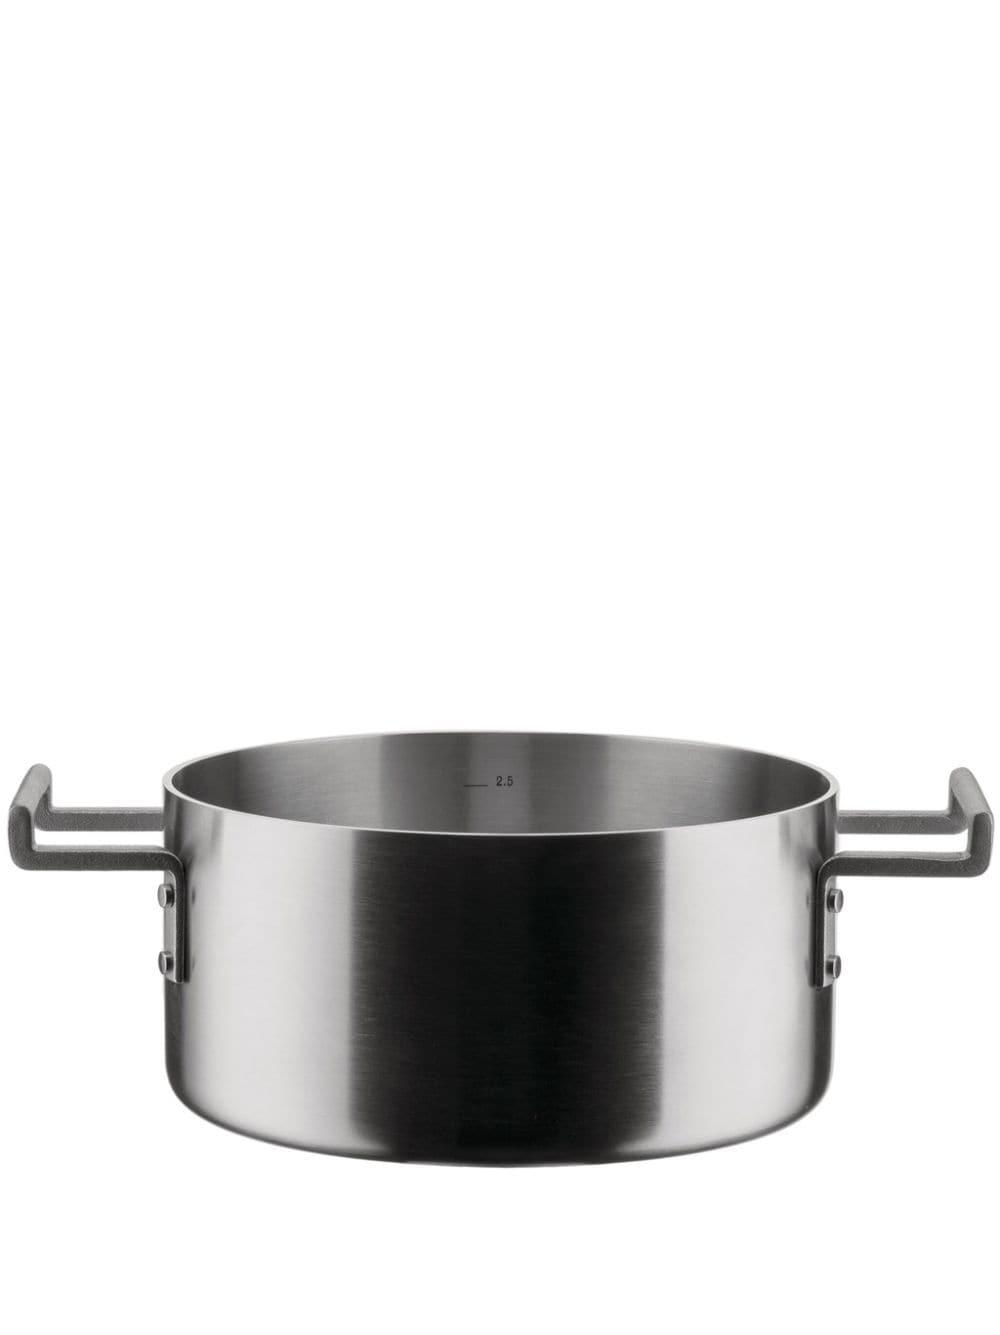 Alessi Convivio stainless steel casserole (3.1l) - Silver von Alessi